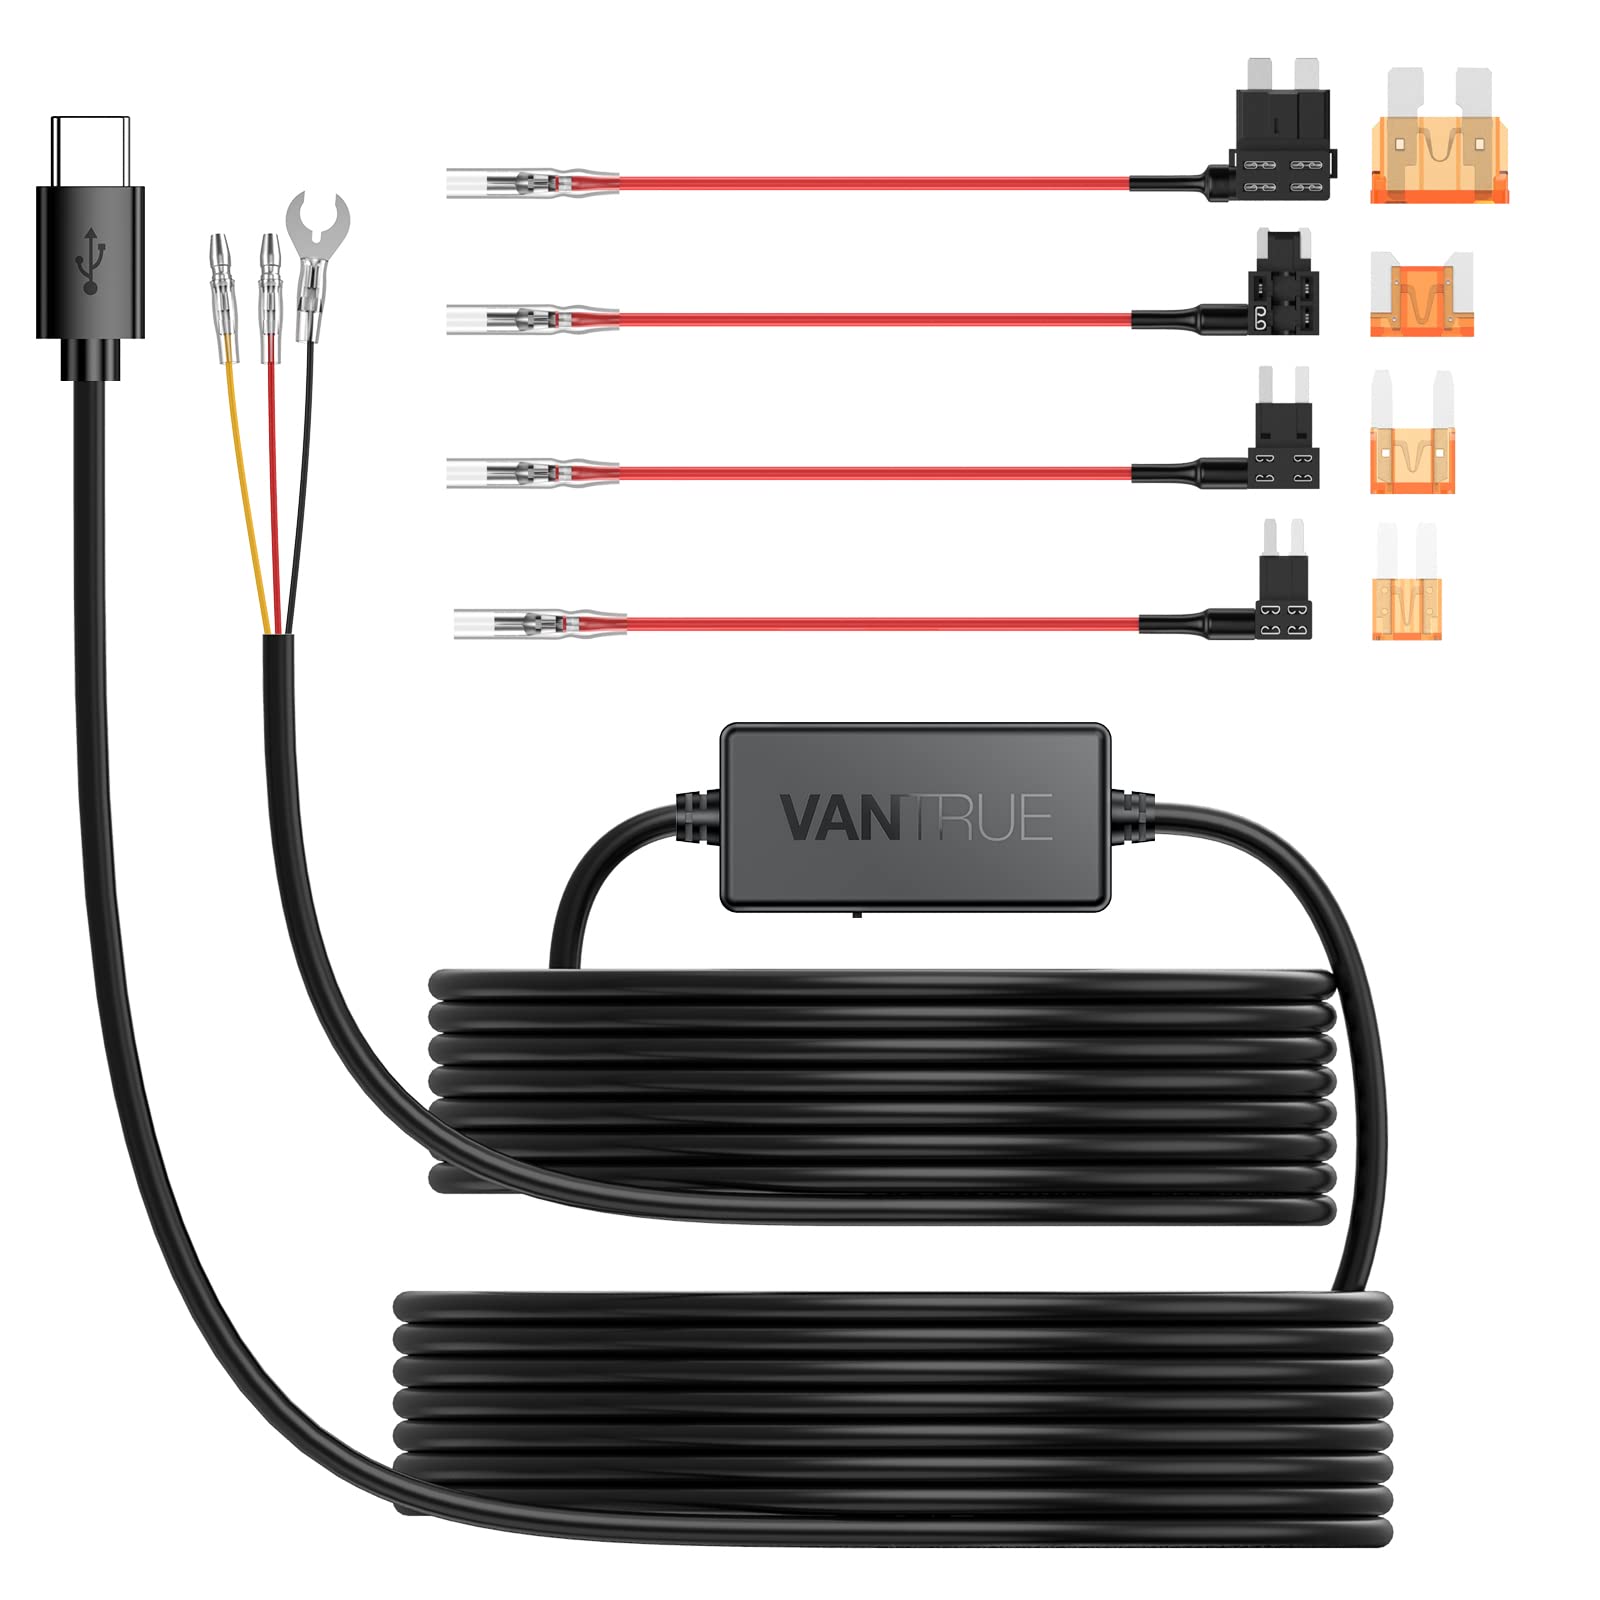 Dash Cam Hardwire Kits Mini USB 12V-24V to 5V Car Dash Camera Charger Power  Cord 11.5ft 